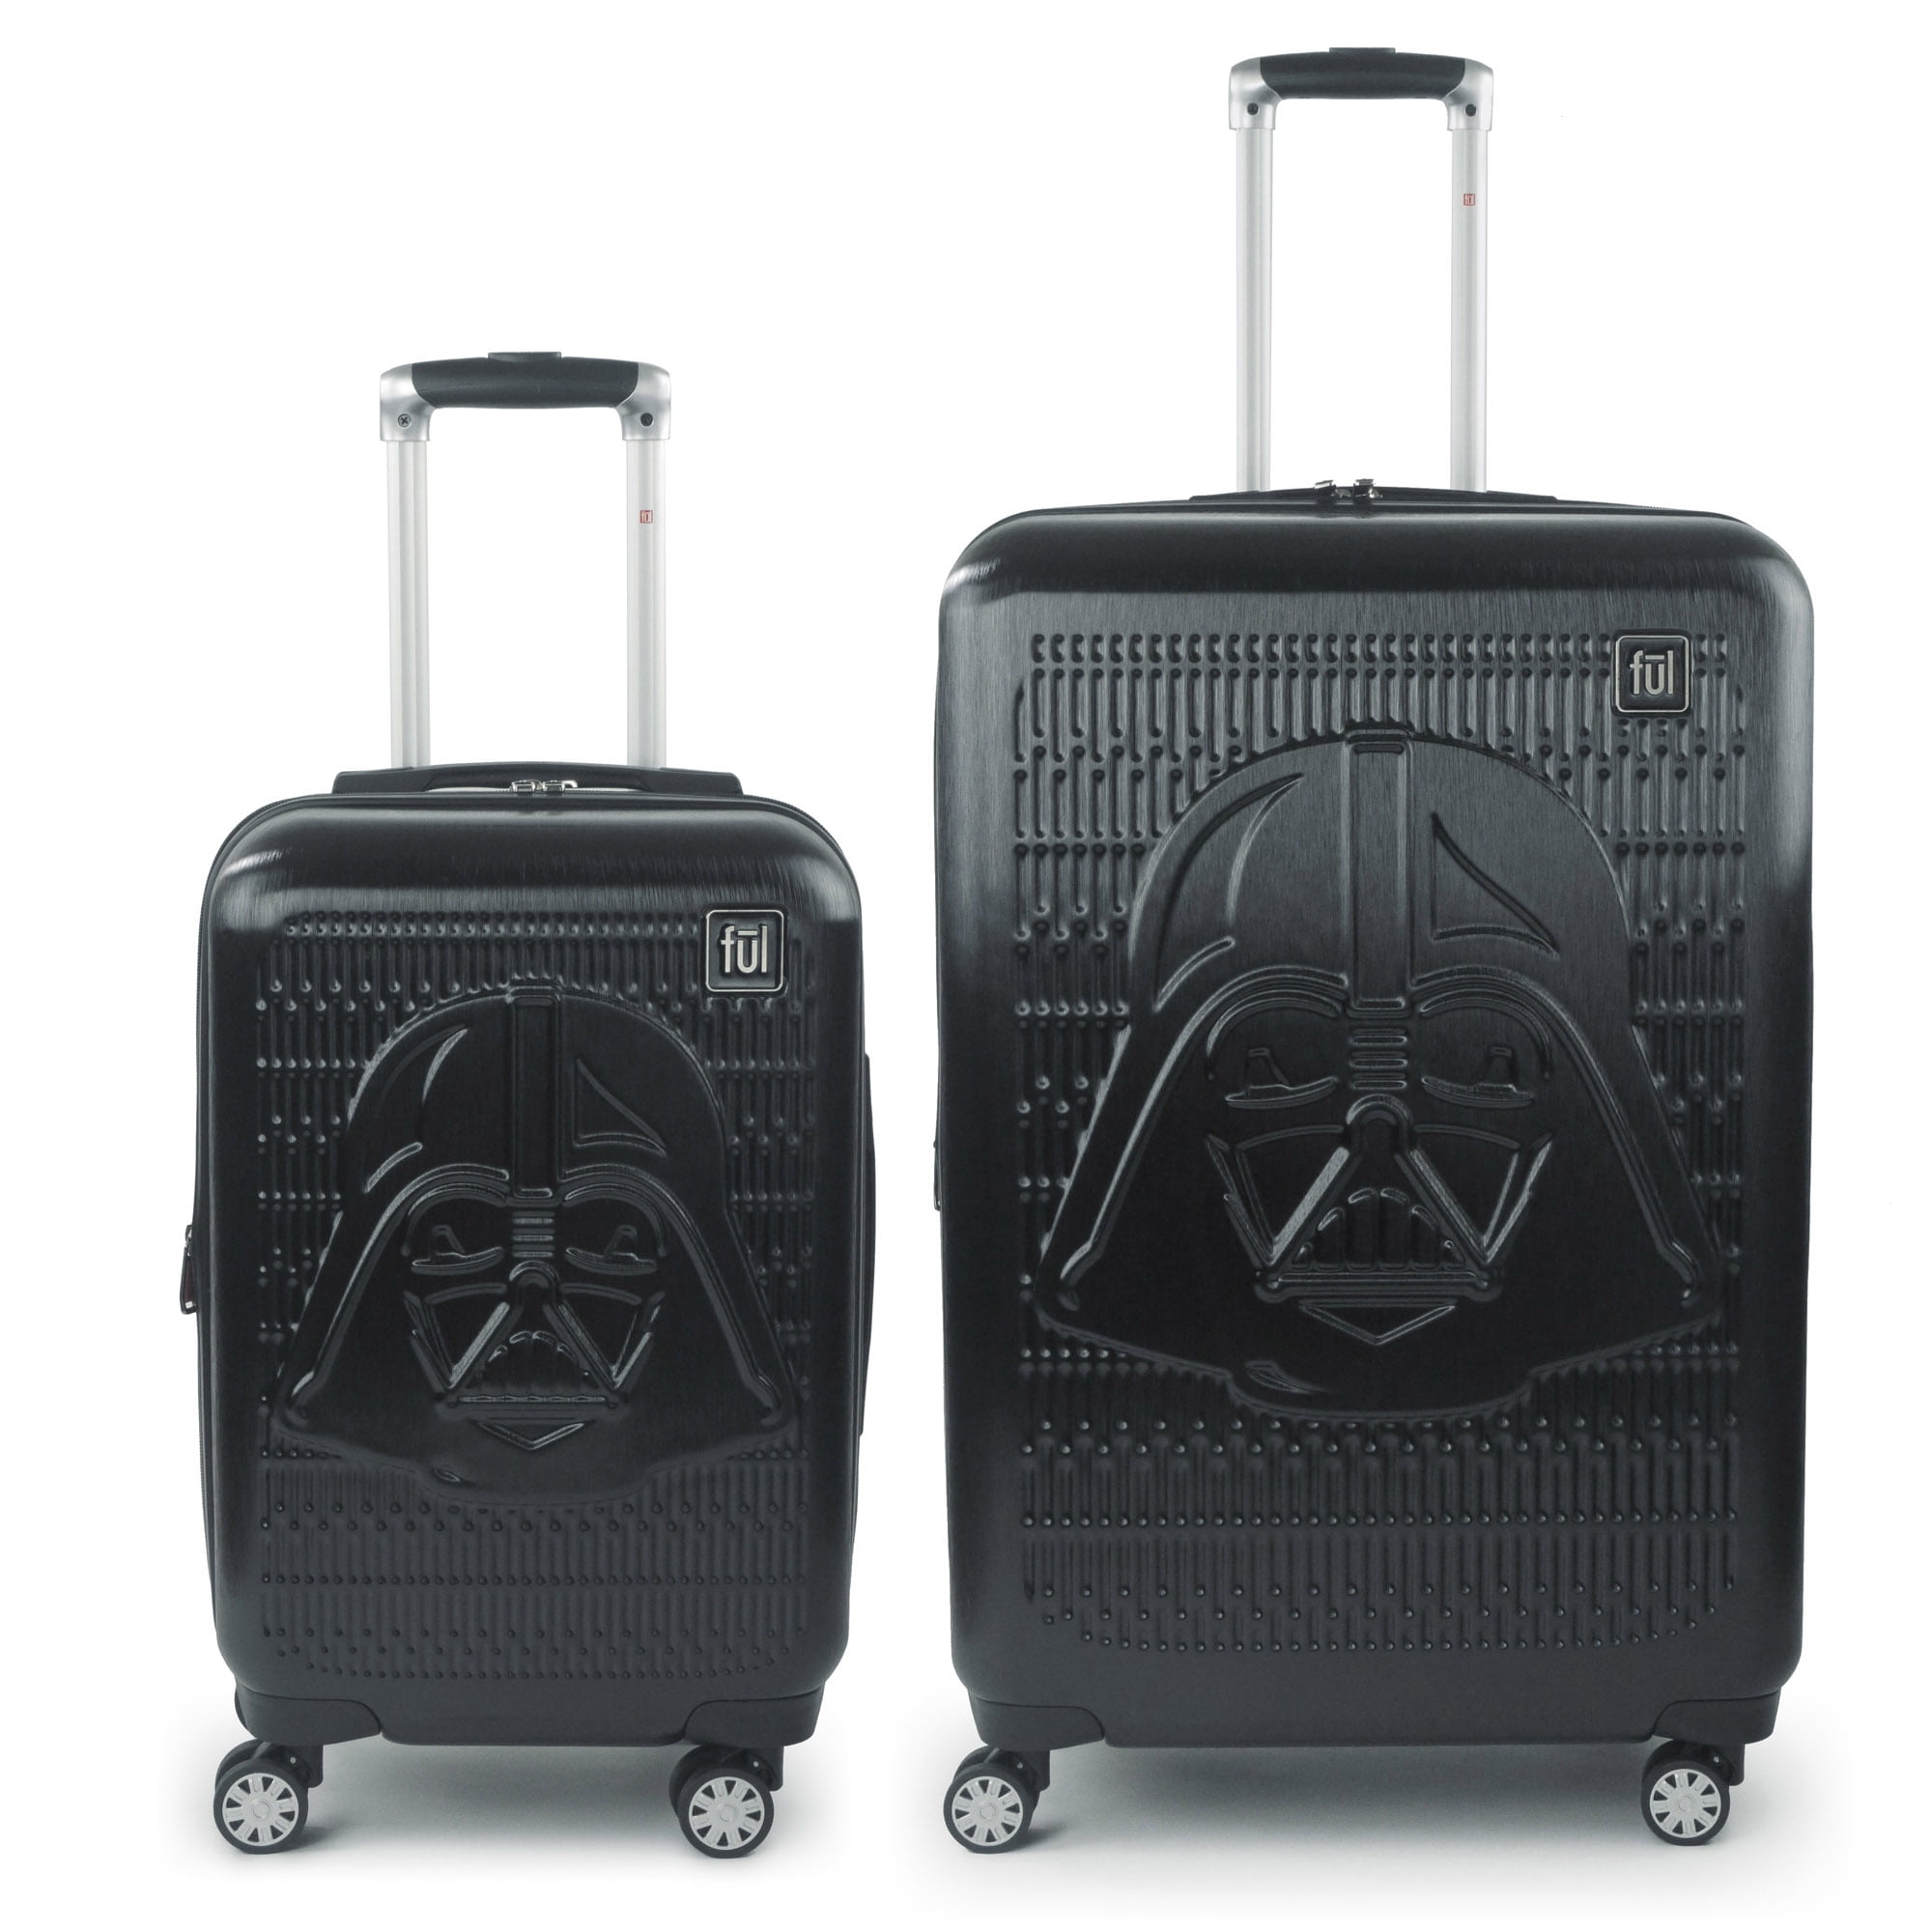 Bags & Purses Luggage & Travel Rolling Luggage Star Wars custom finish suitcase 